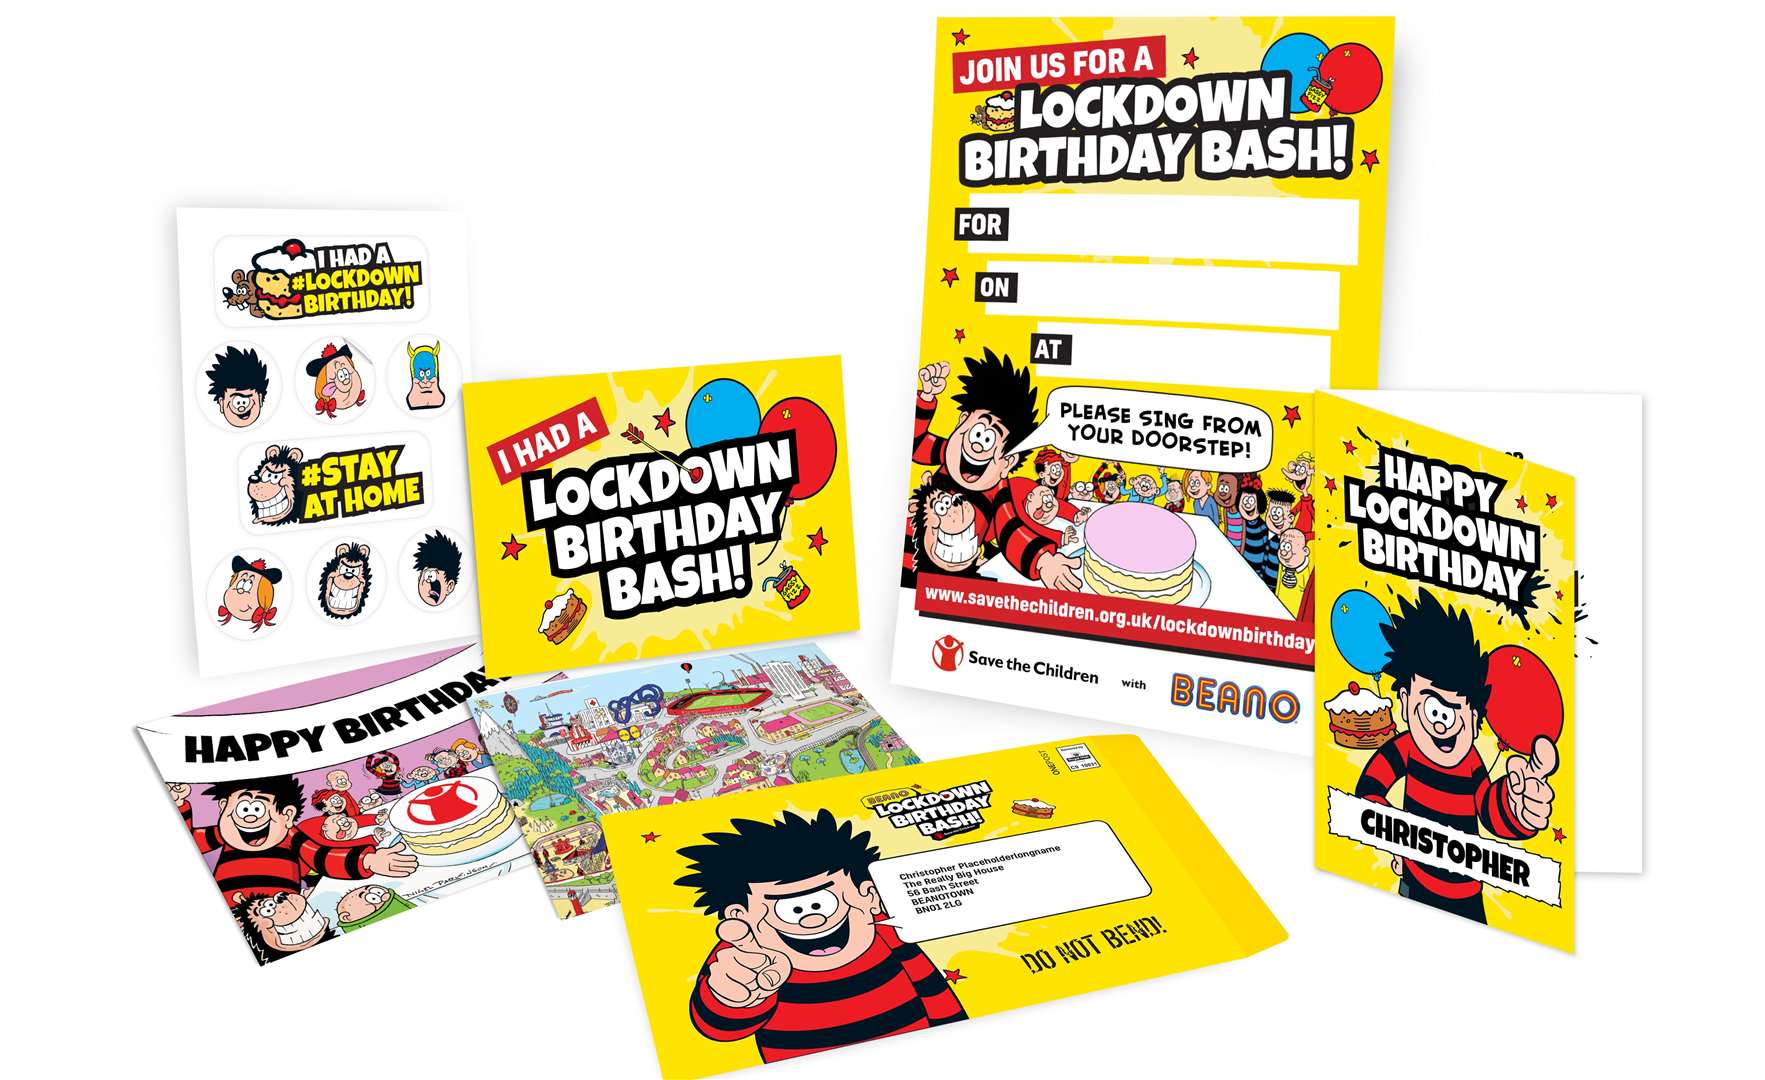 Lockdown birthday kits from Save the Children